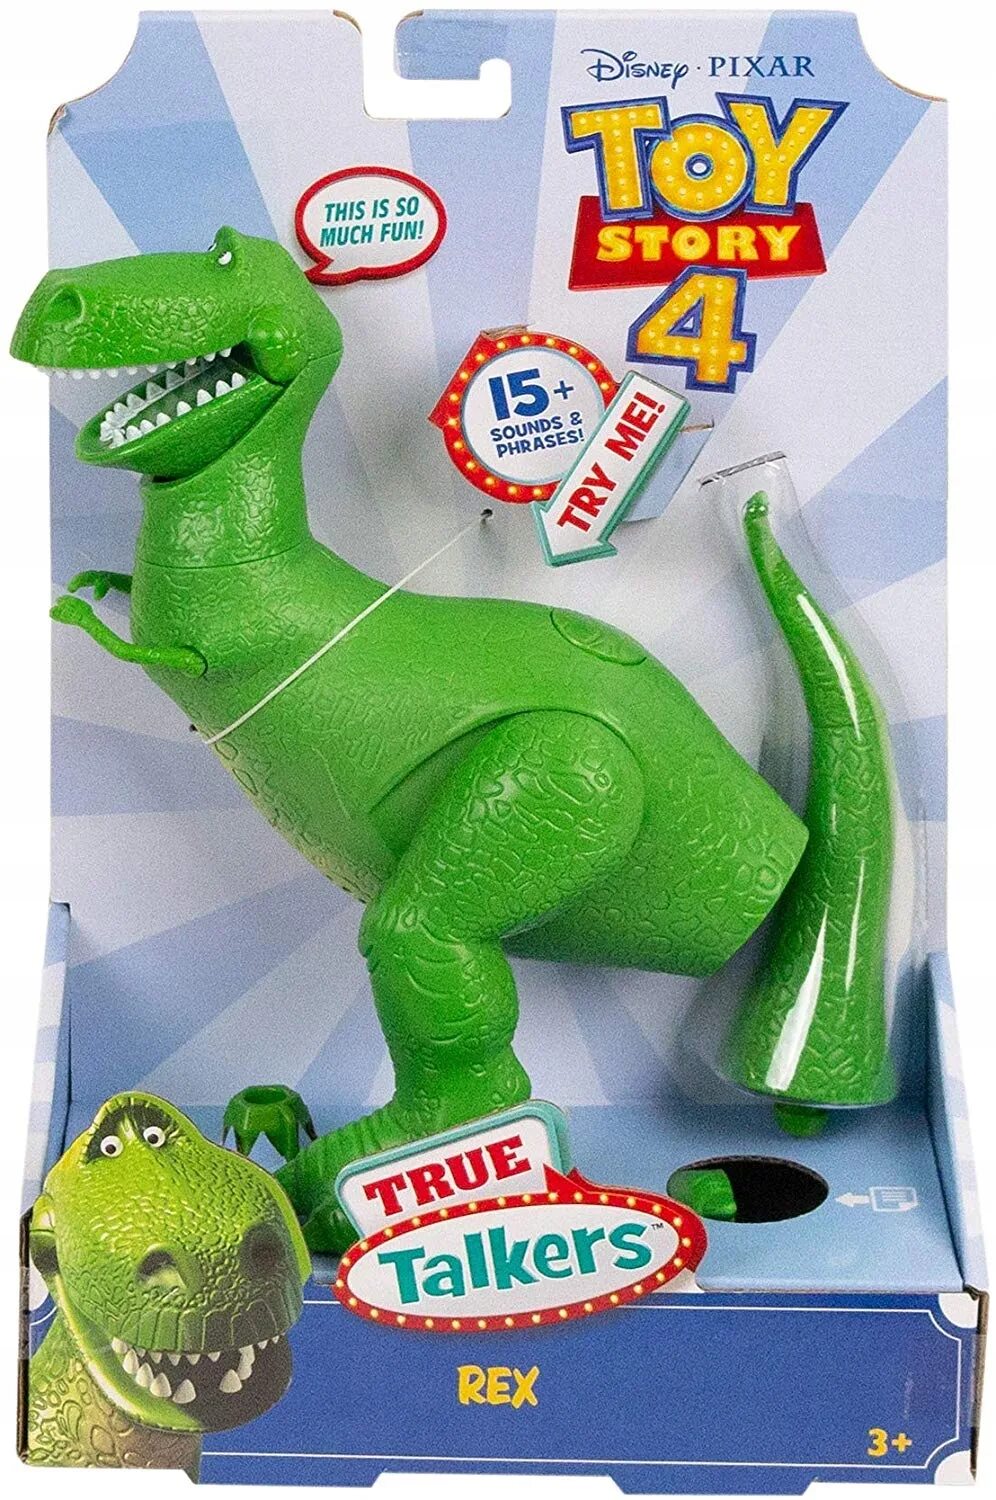 Игрушка Toy story рекс. Динозавр рекс из история игрушек-4. Toy story collection рекс.